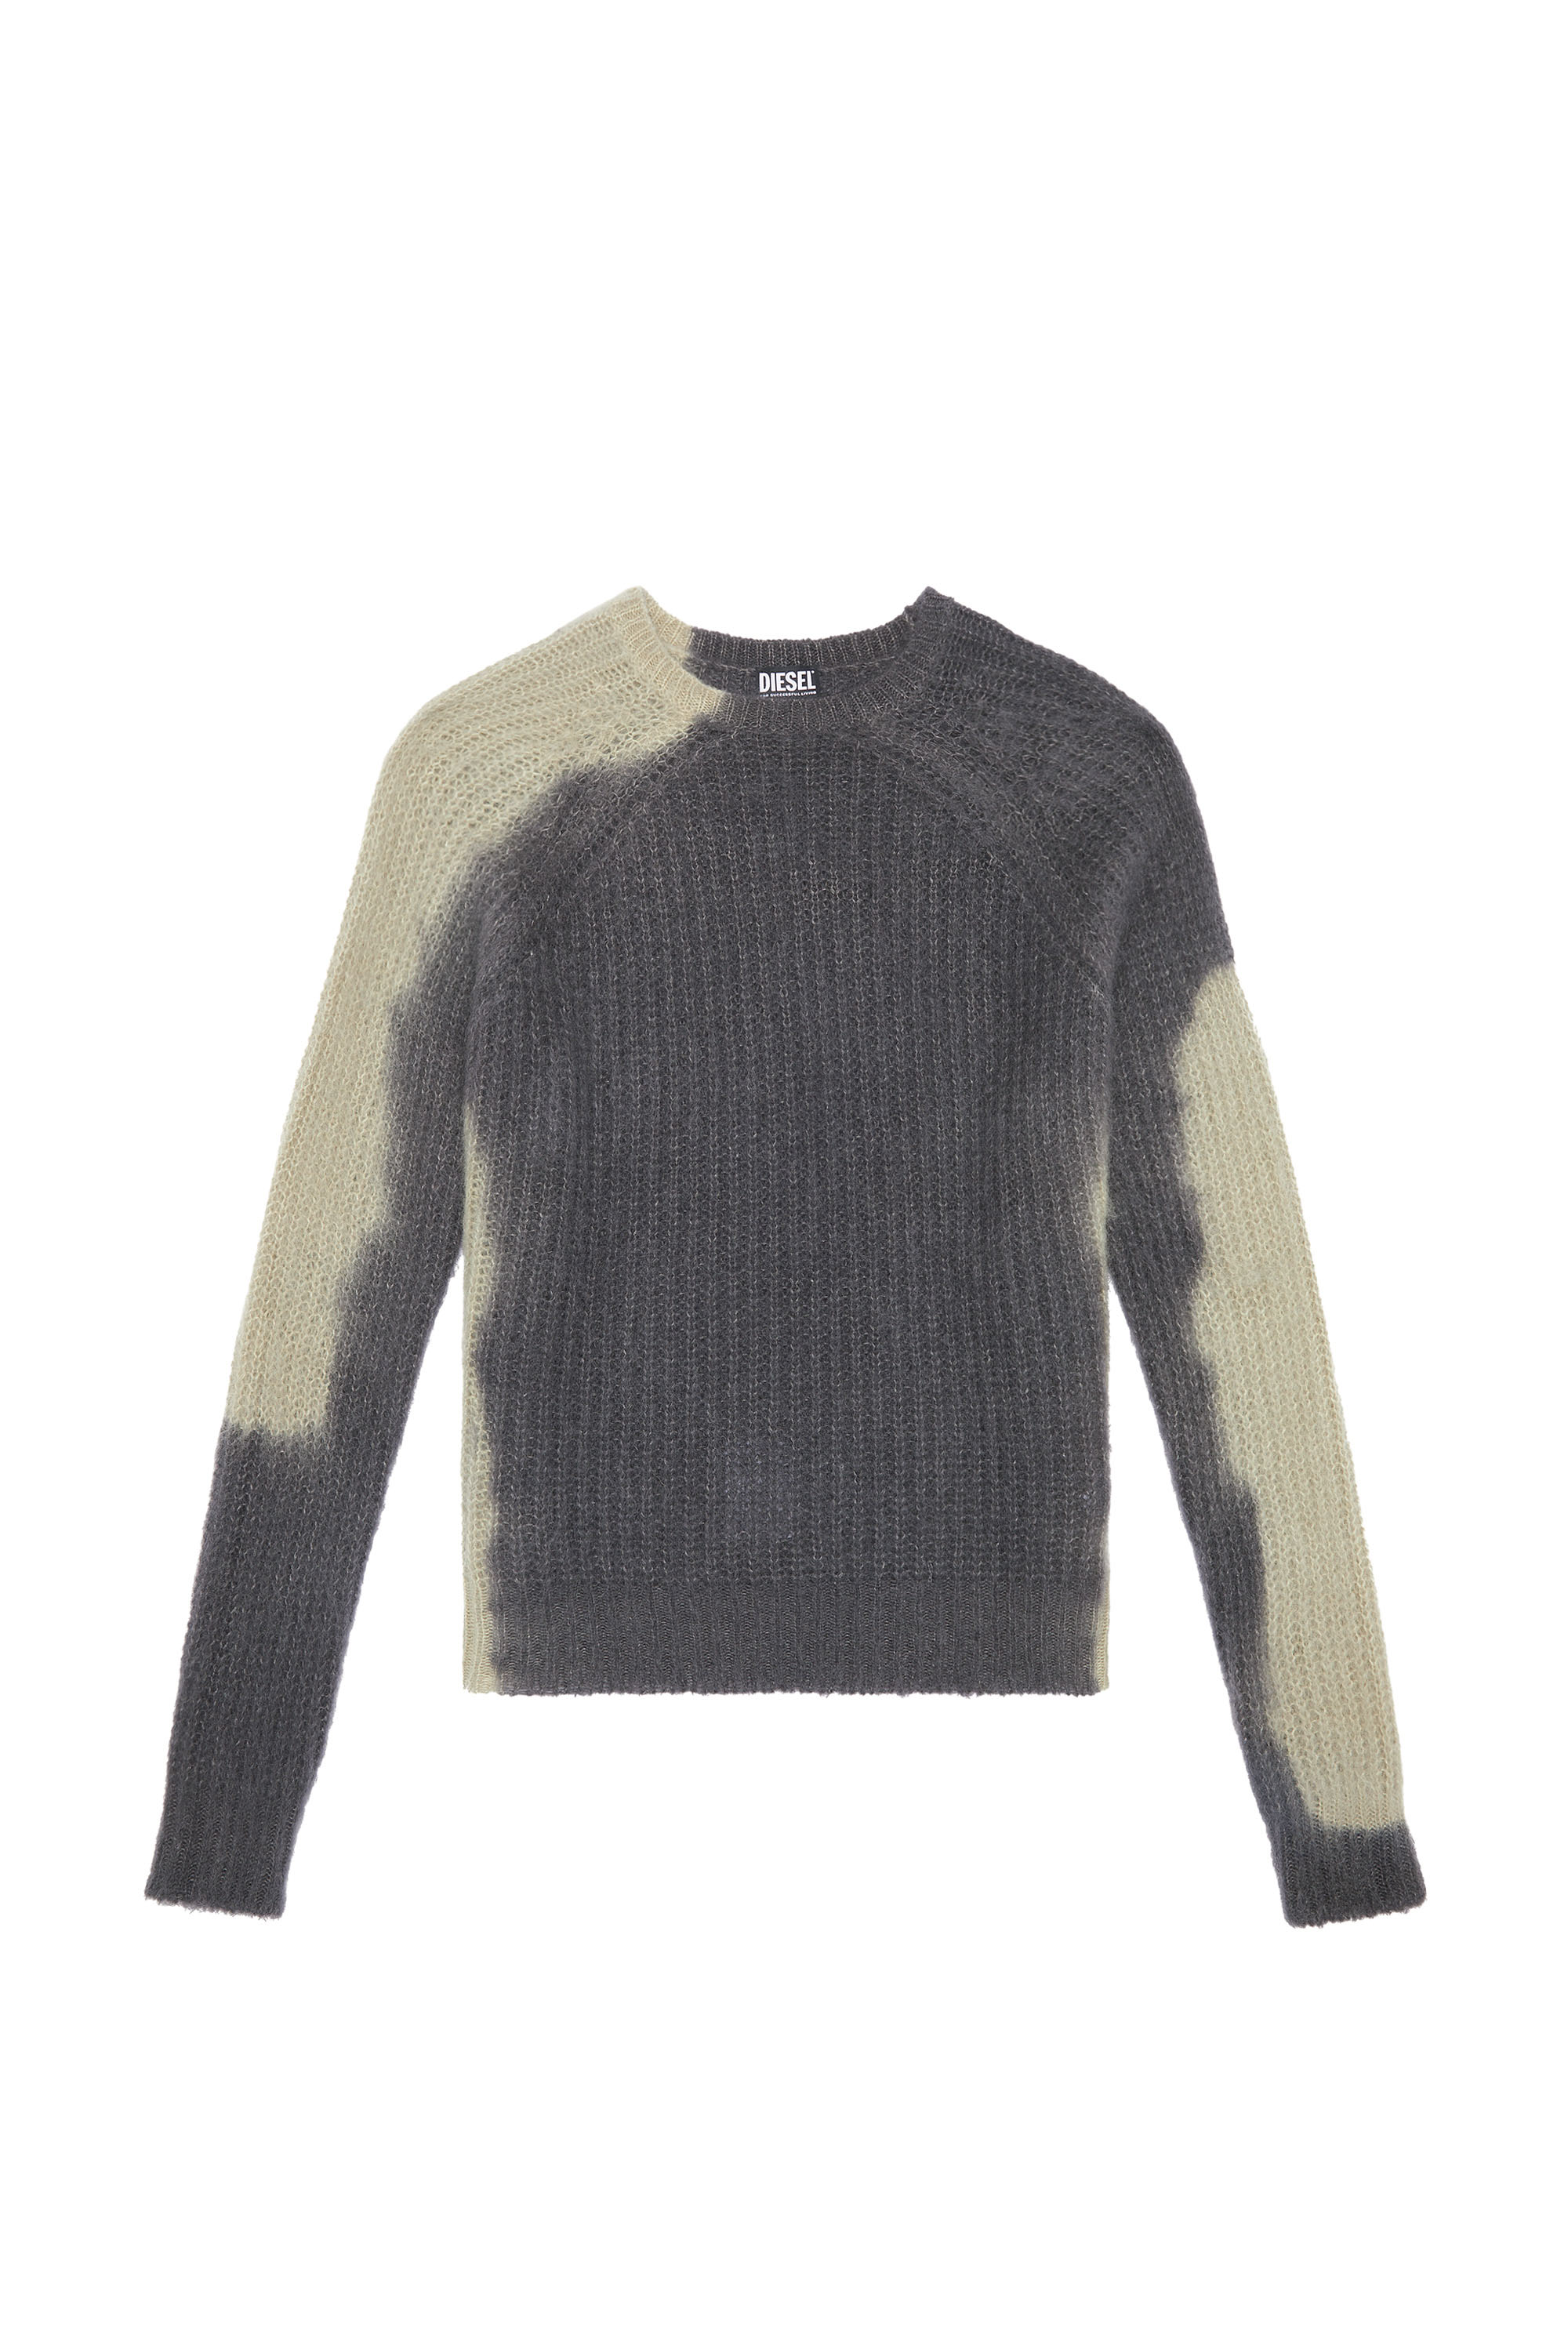 K-OSIMO, Black - Sweaters